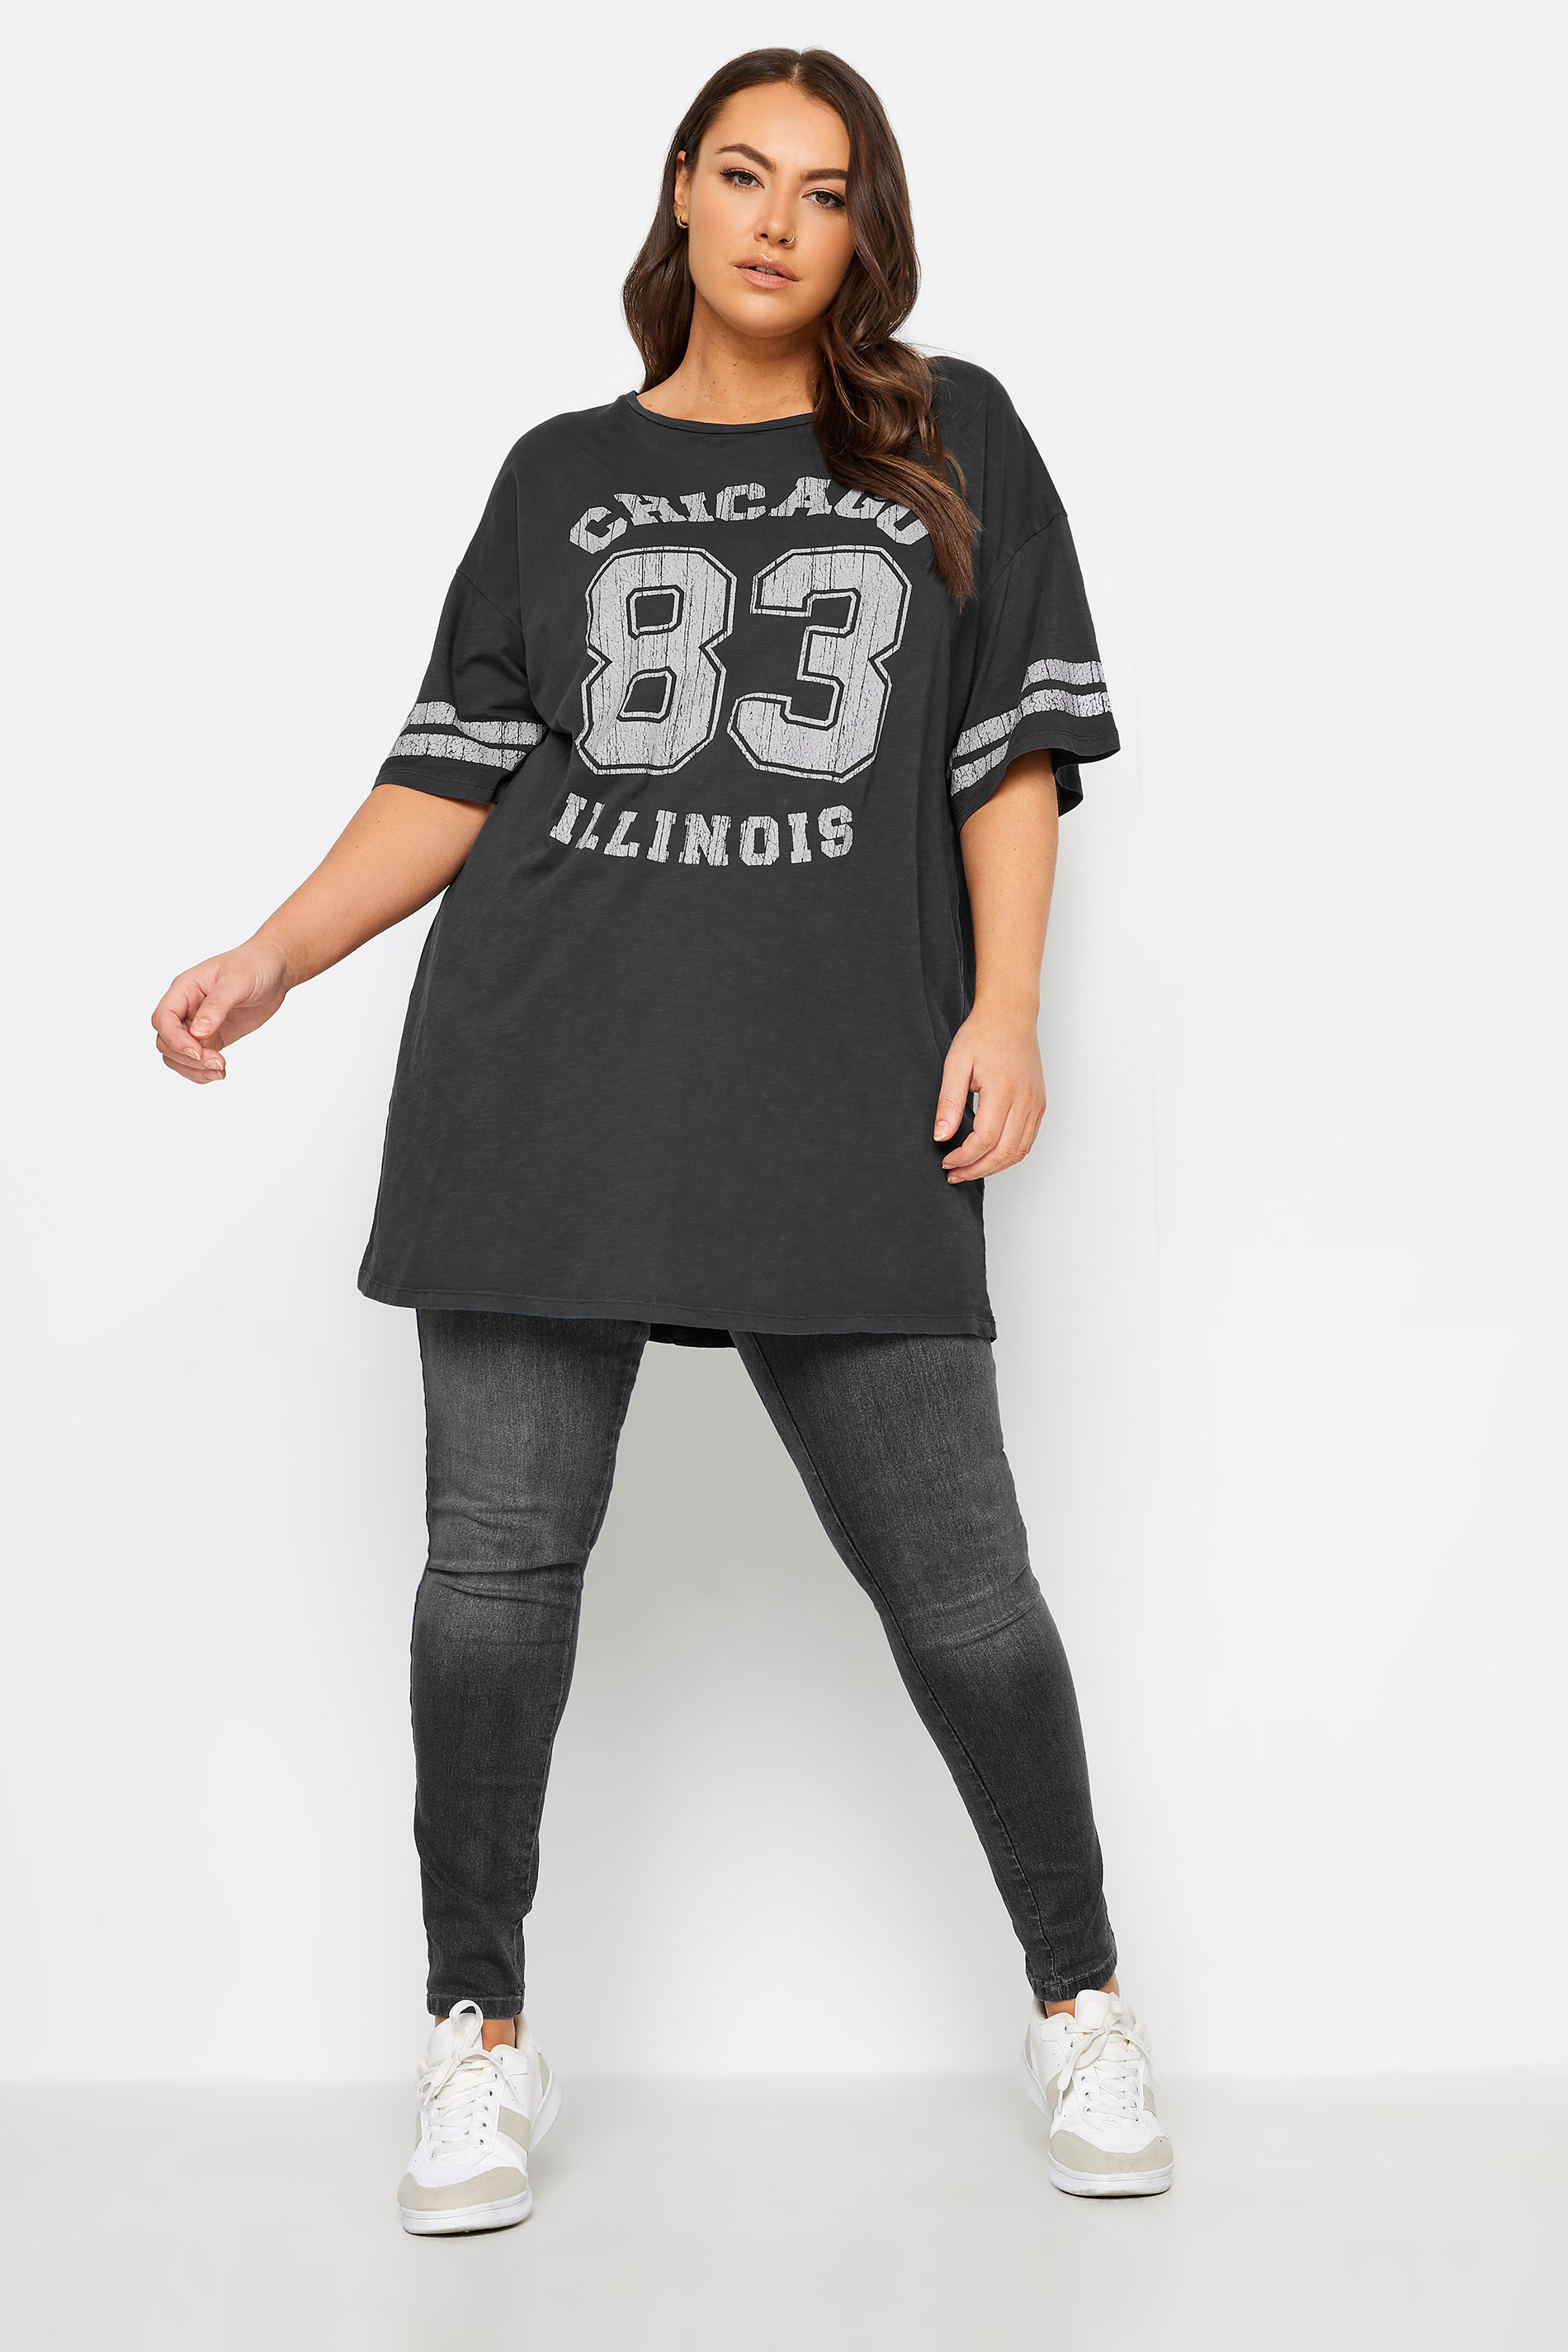 YOURS Plus Size Black Acid Wash 'Chicago' Slogan T-Shirt | Yours Clothing 2